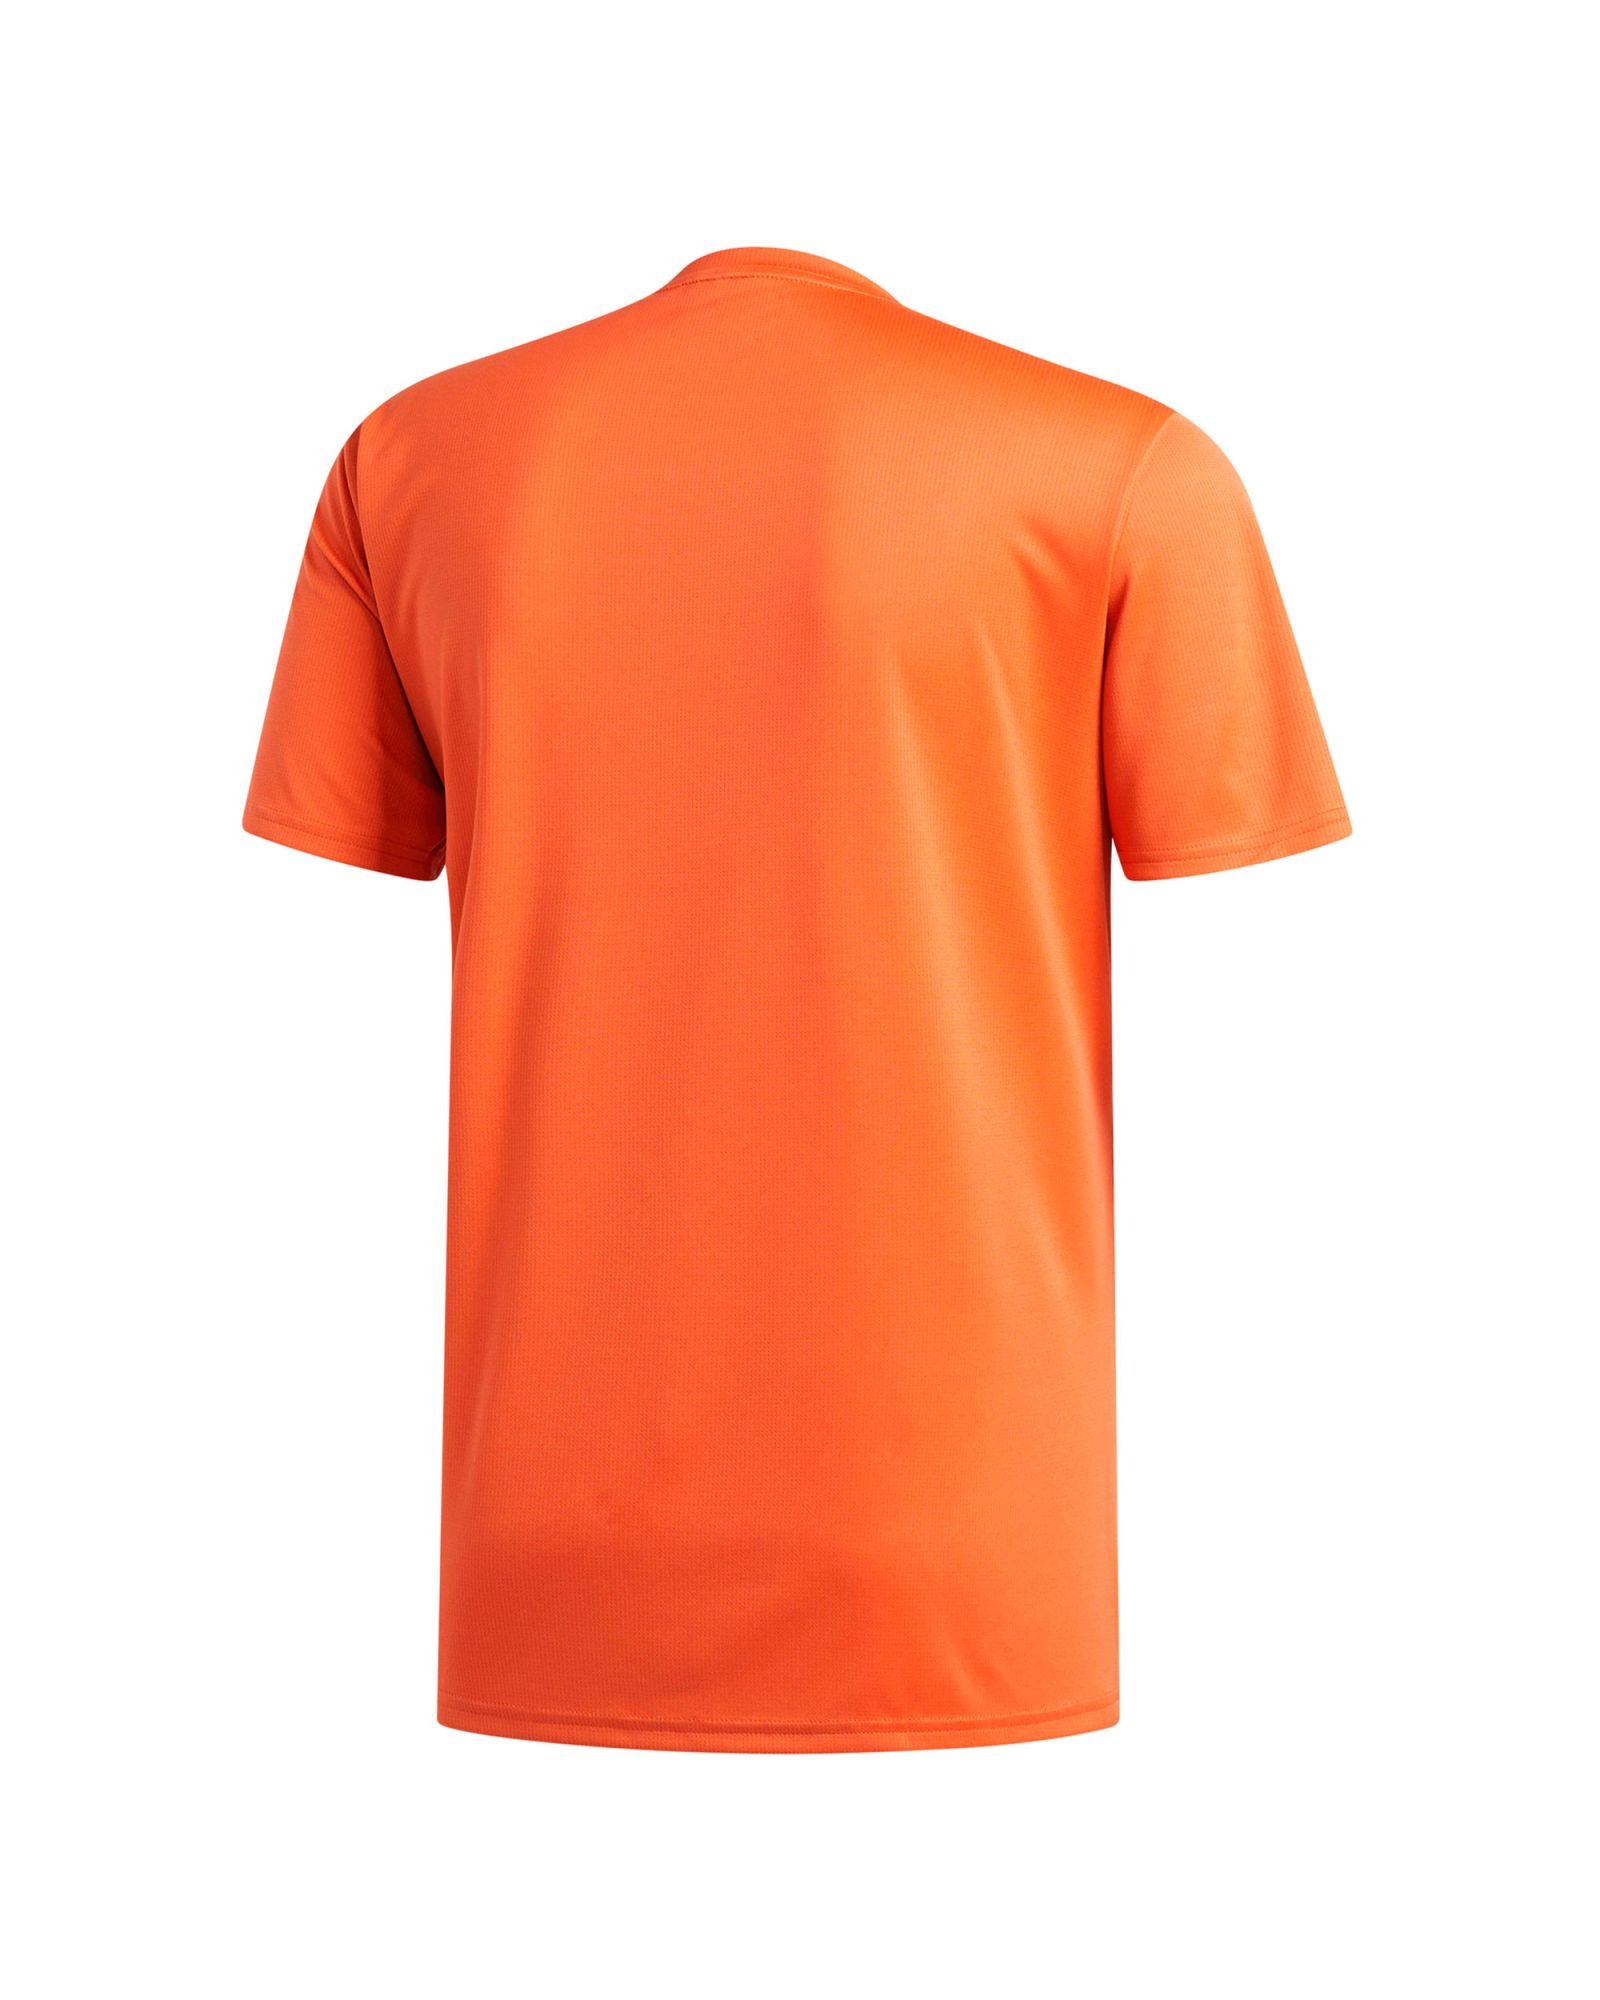 Camiseta de Running Response Naranja - Fútbol Factory